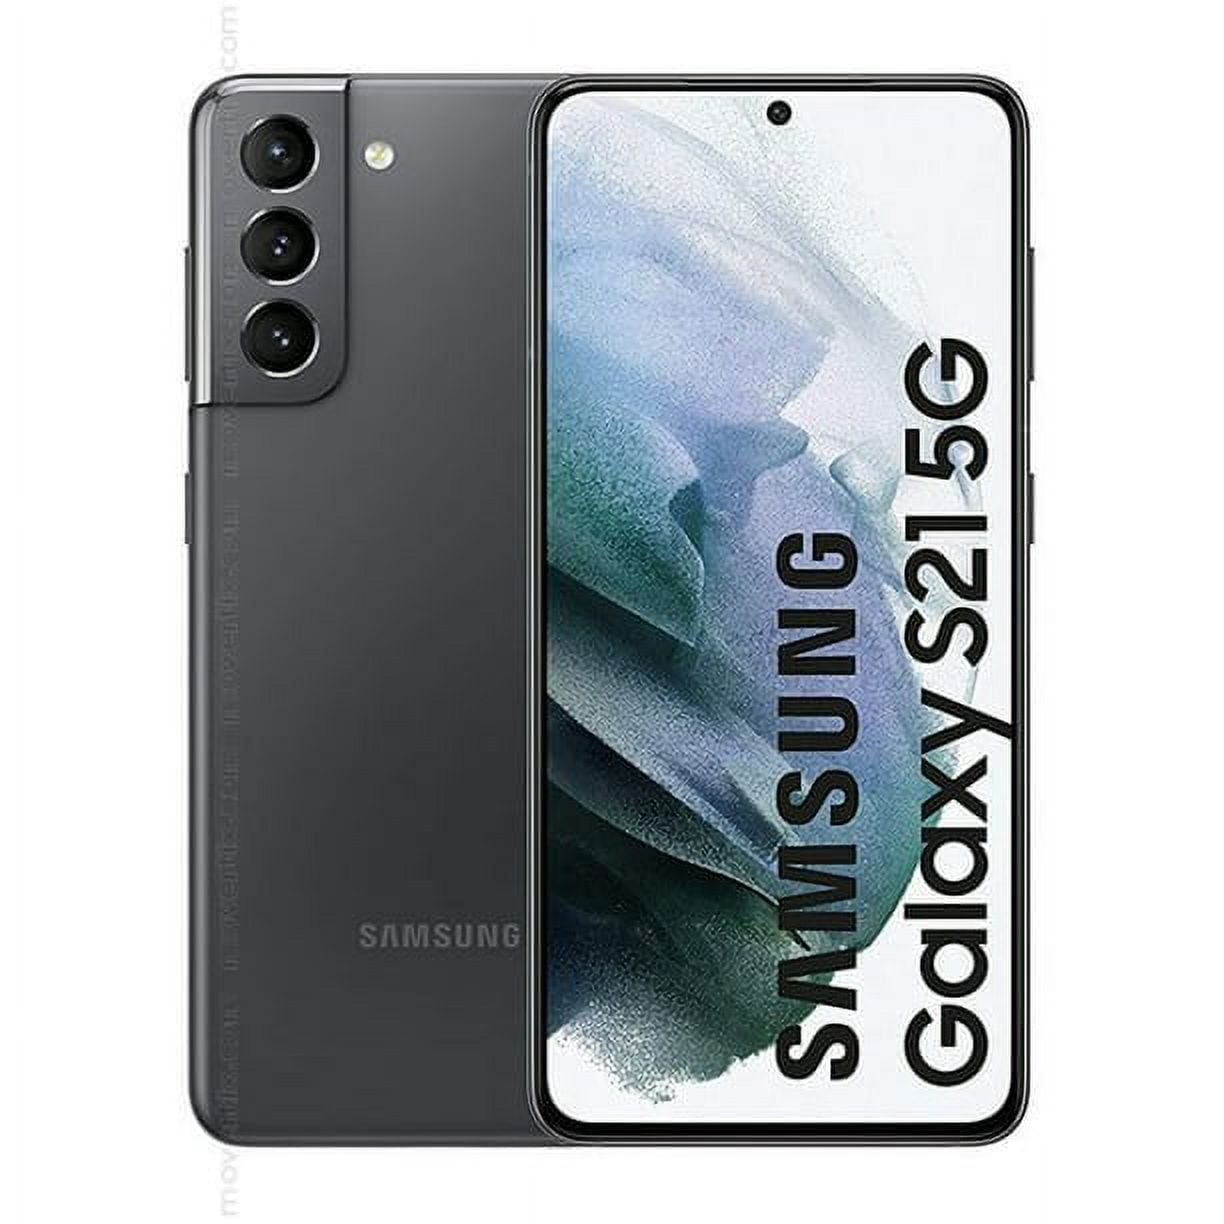 Refurbished Samsung Galaxy S21 Ultra 5G 256GB Price in Kenya